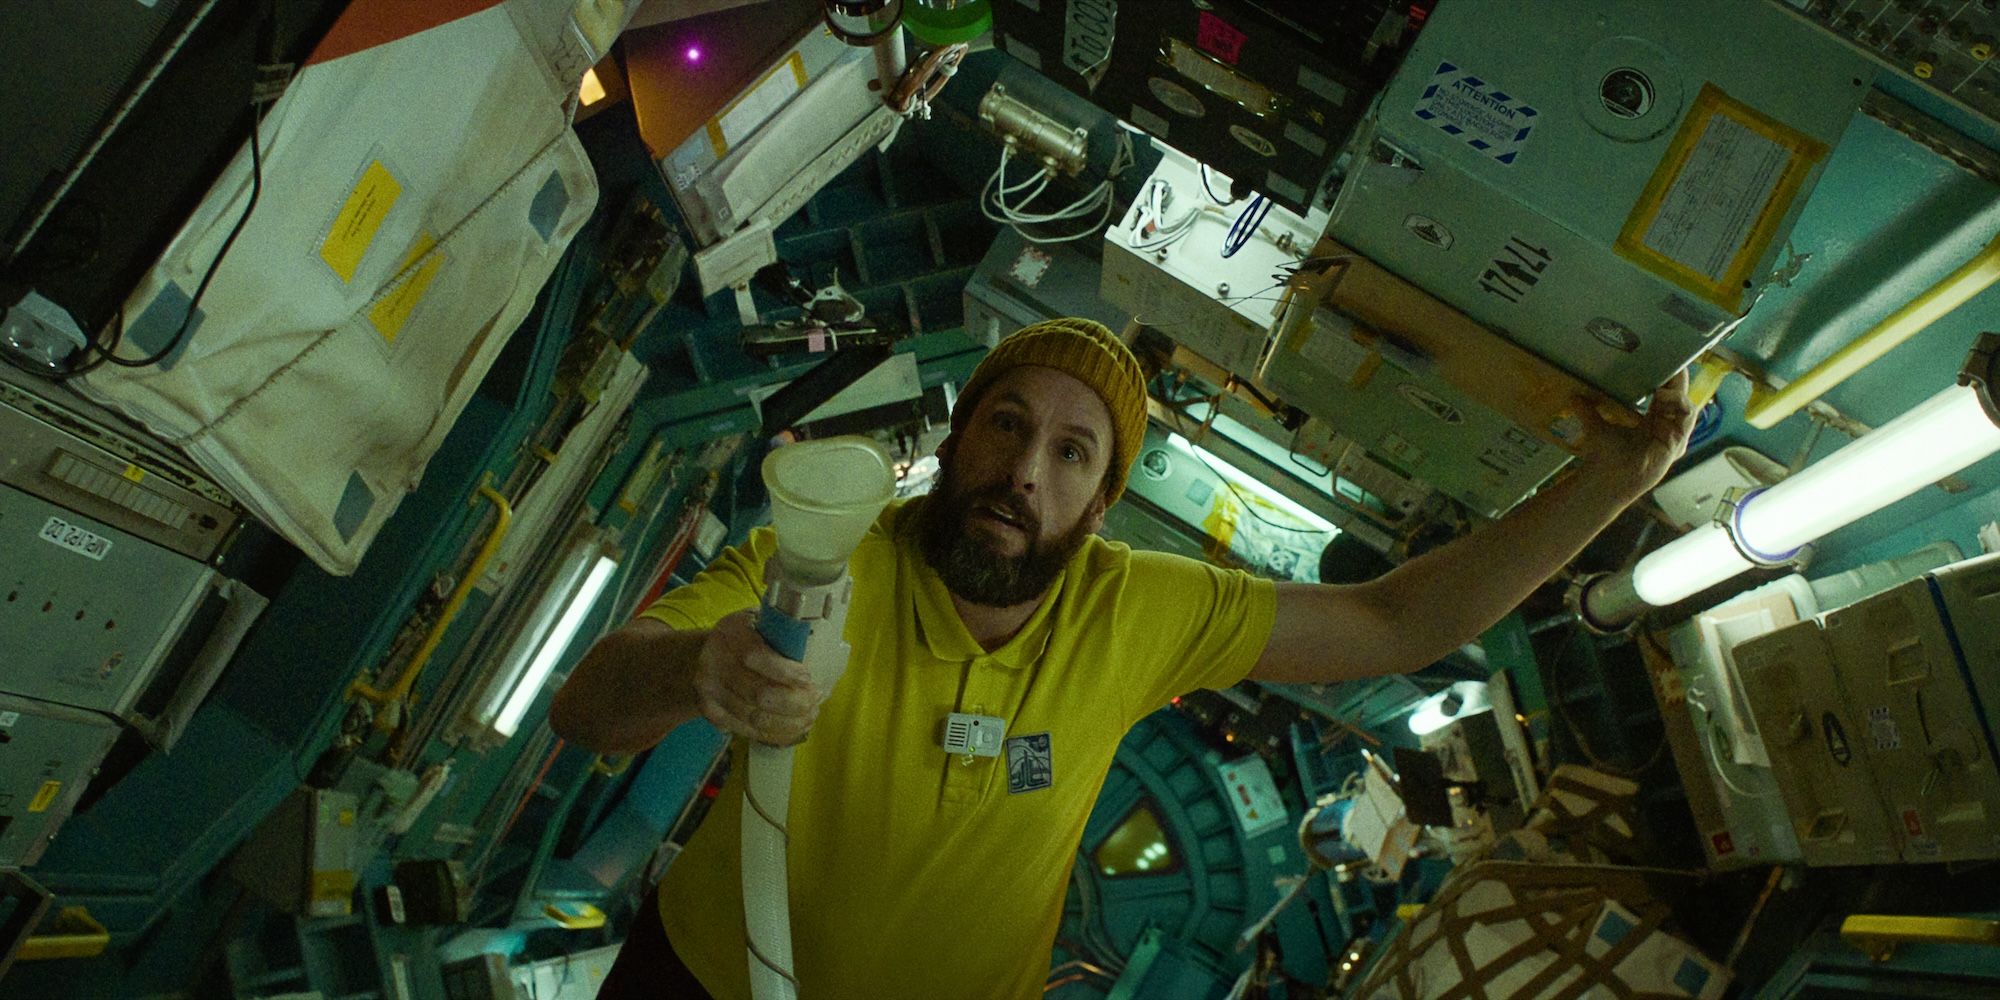 Adam Sandler struggles through the shuttle in Spaceman